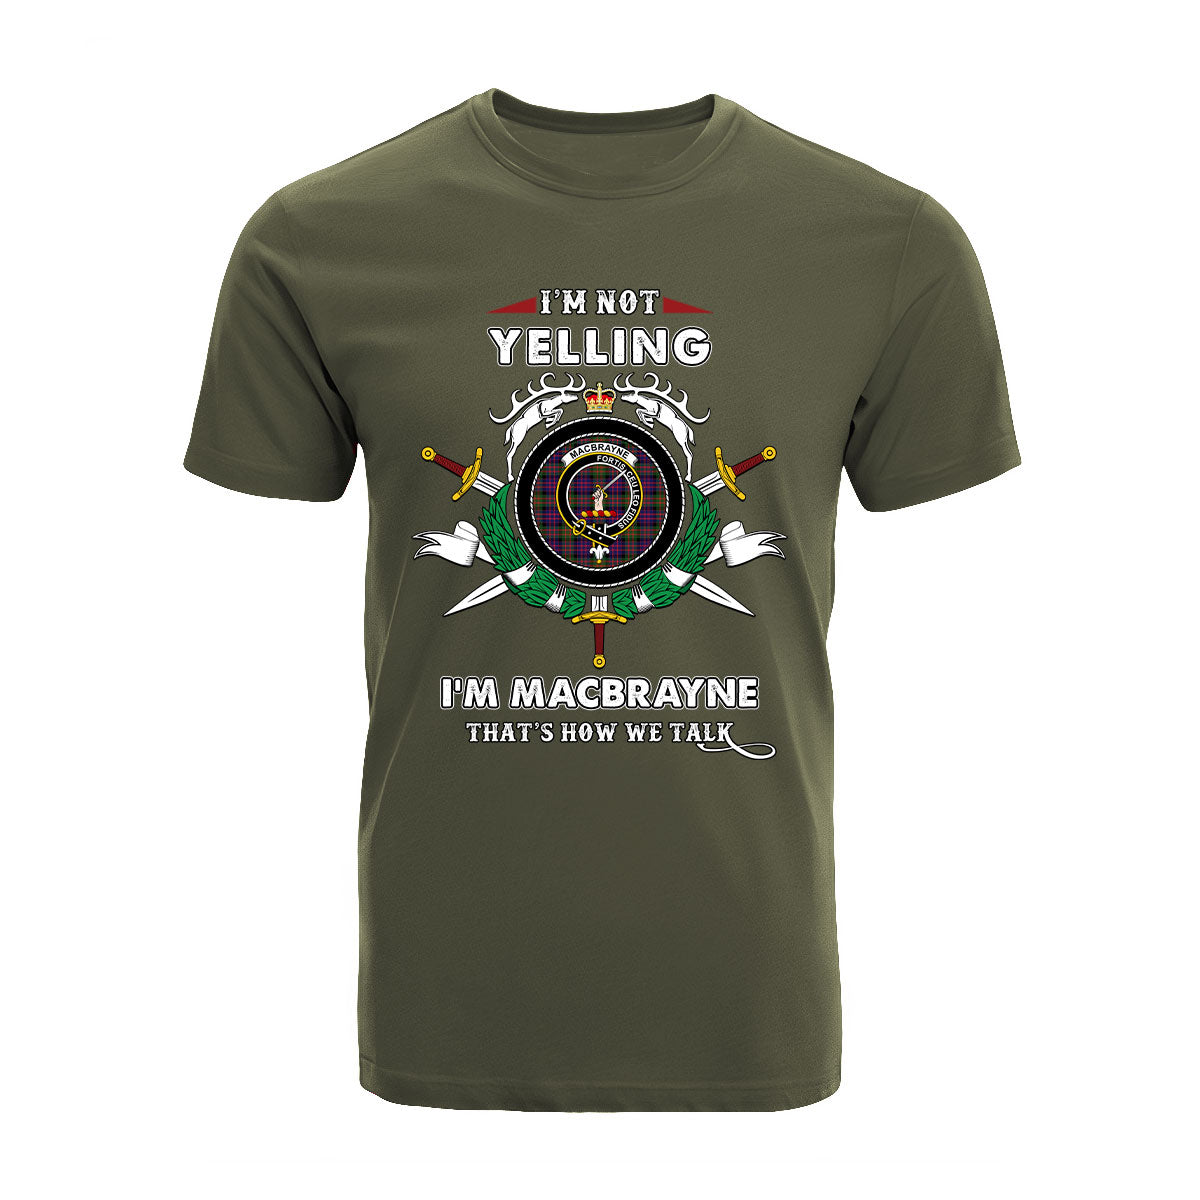 MacBrayne Tartan Crest T-shirt - I'm not yelling style